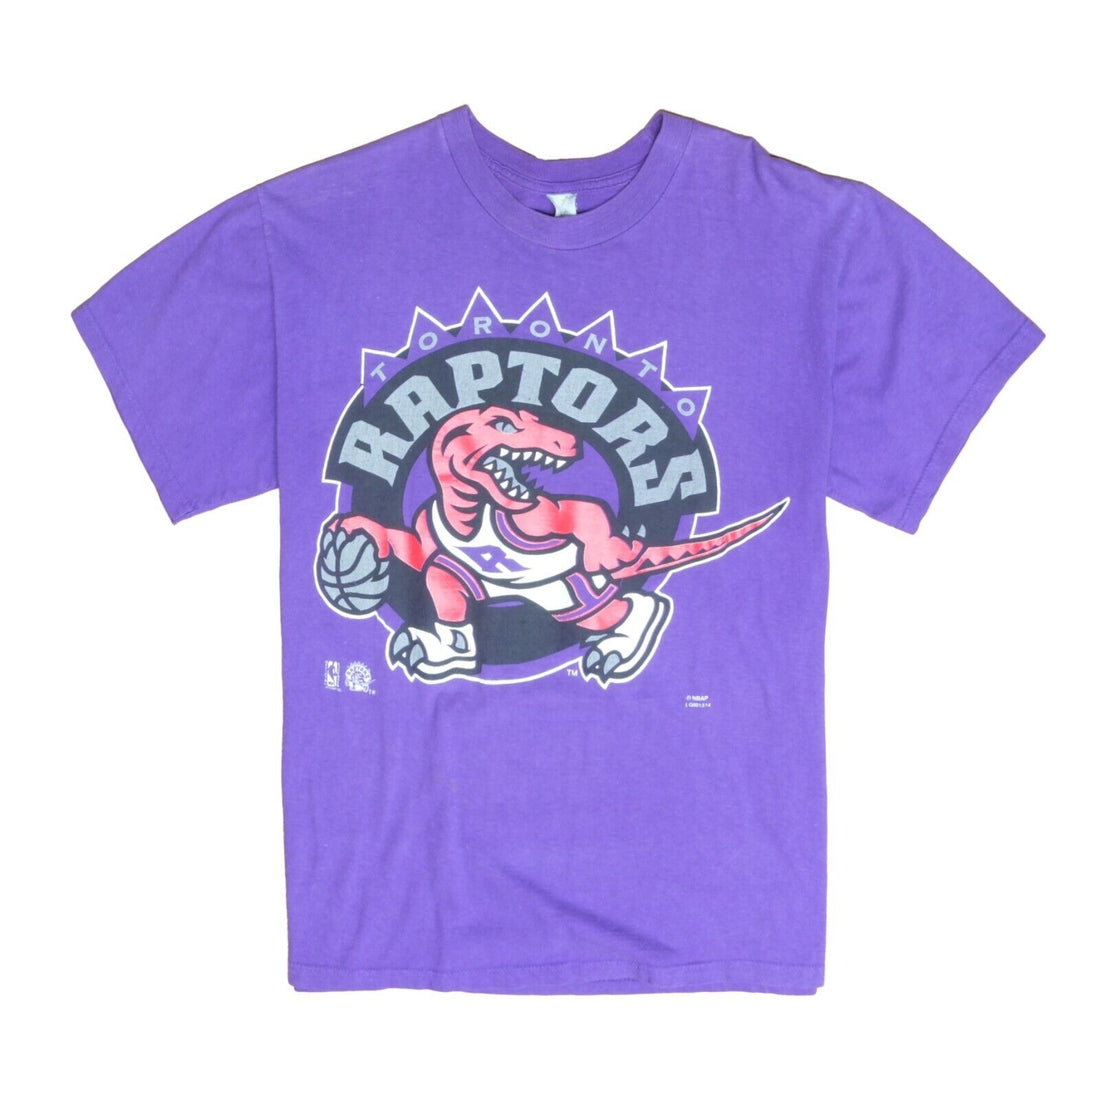 Toronto Raptors Vintage 90s T-Shirt, Toronto Raptors Shirt